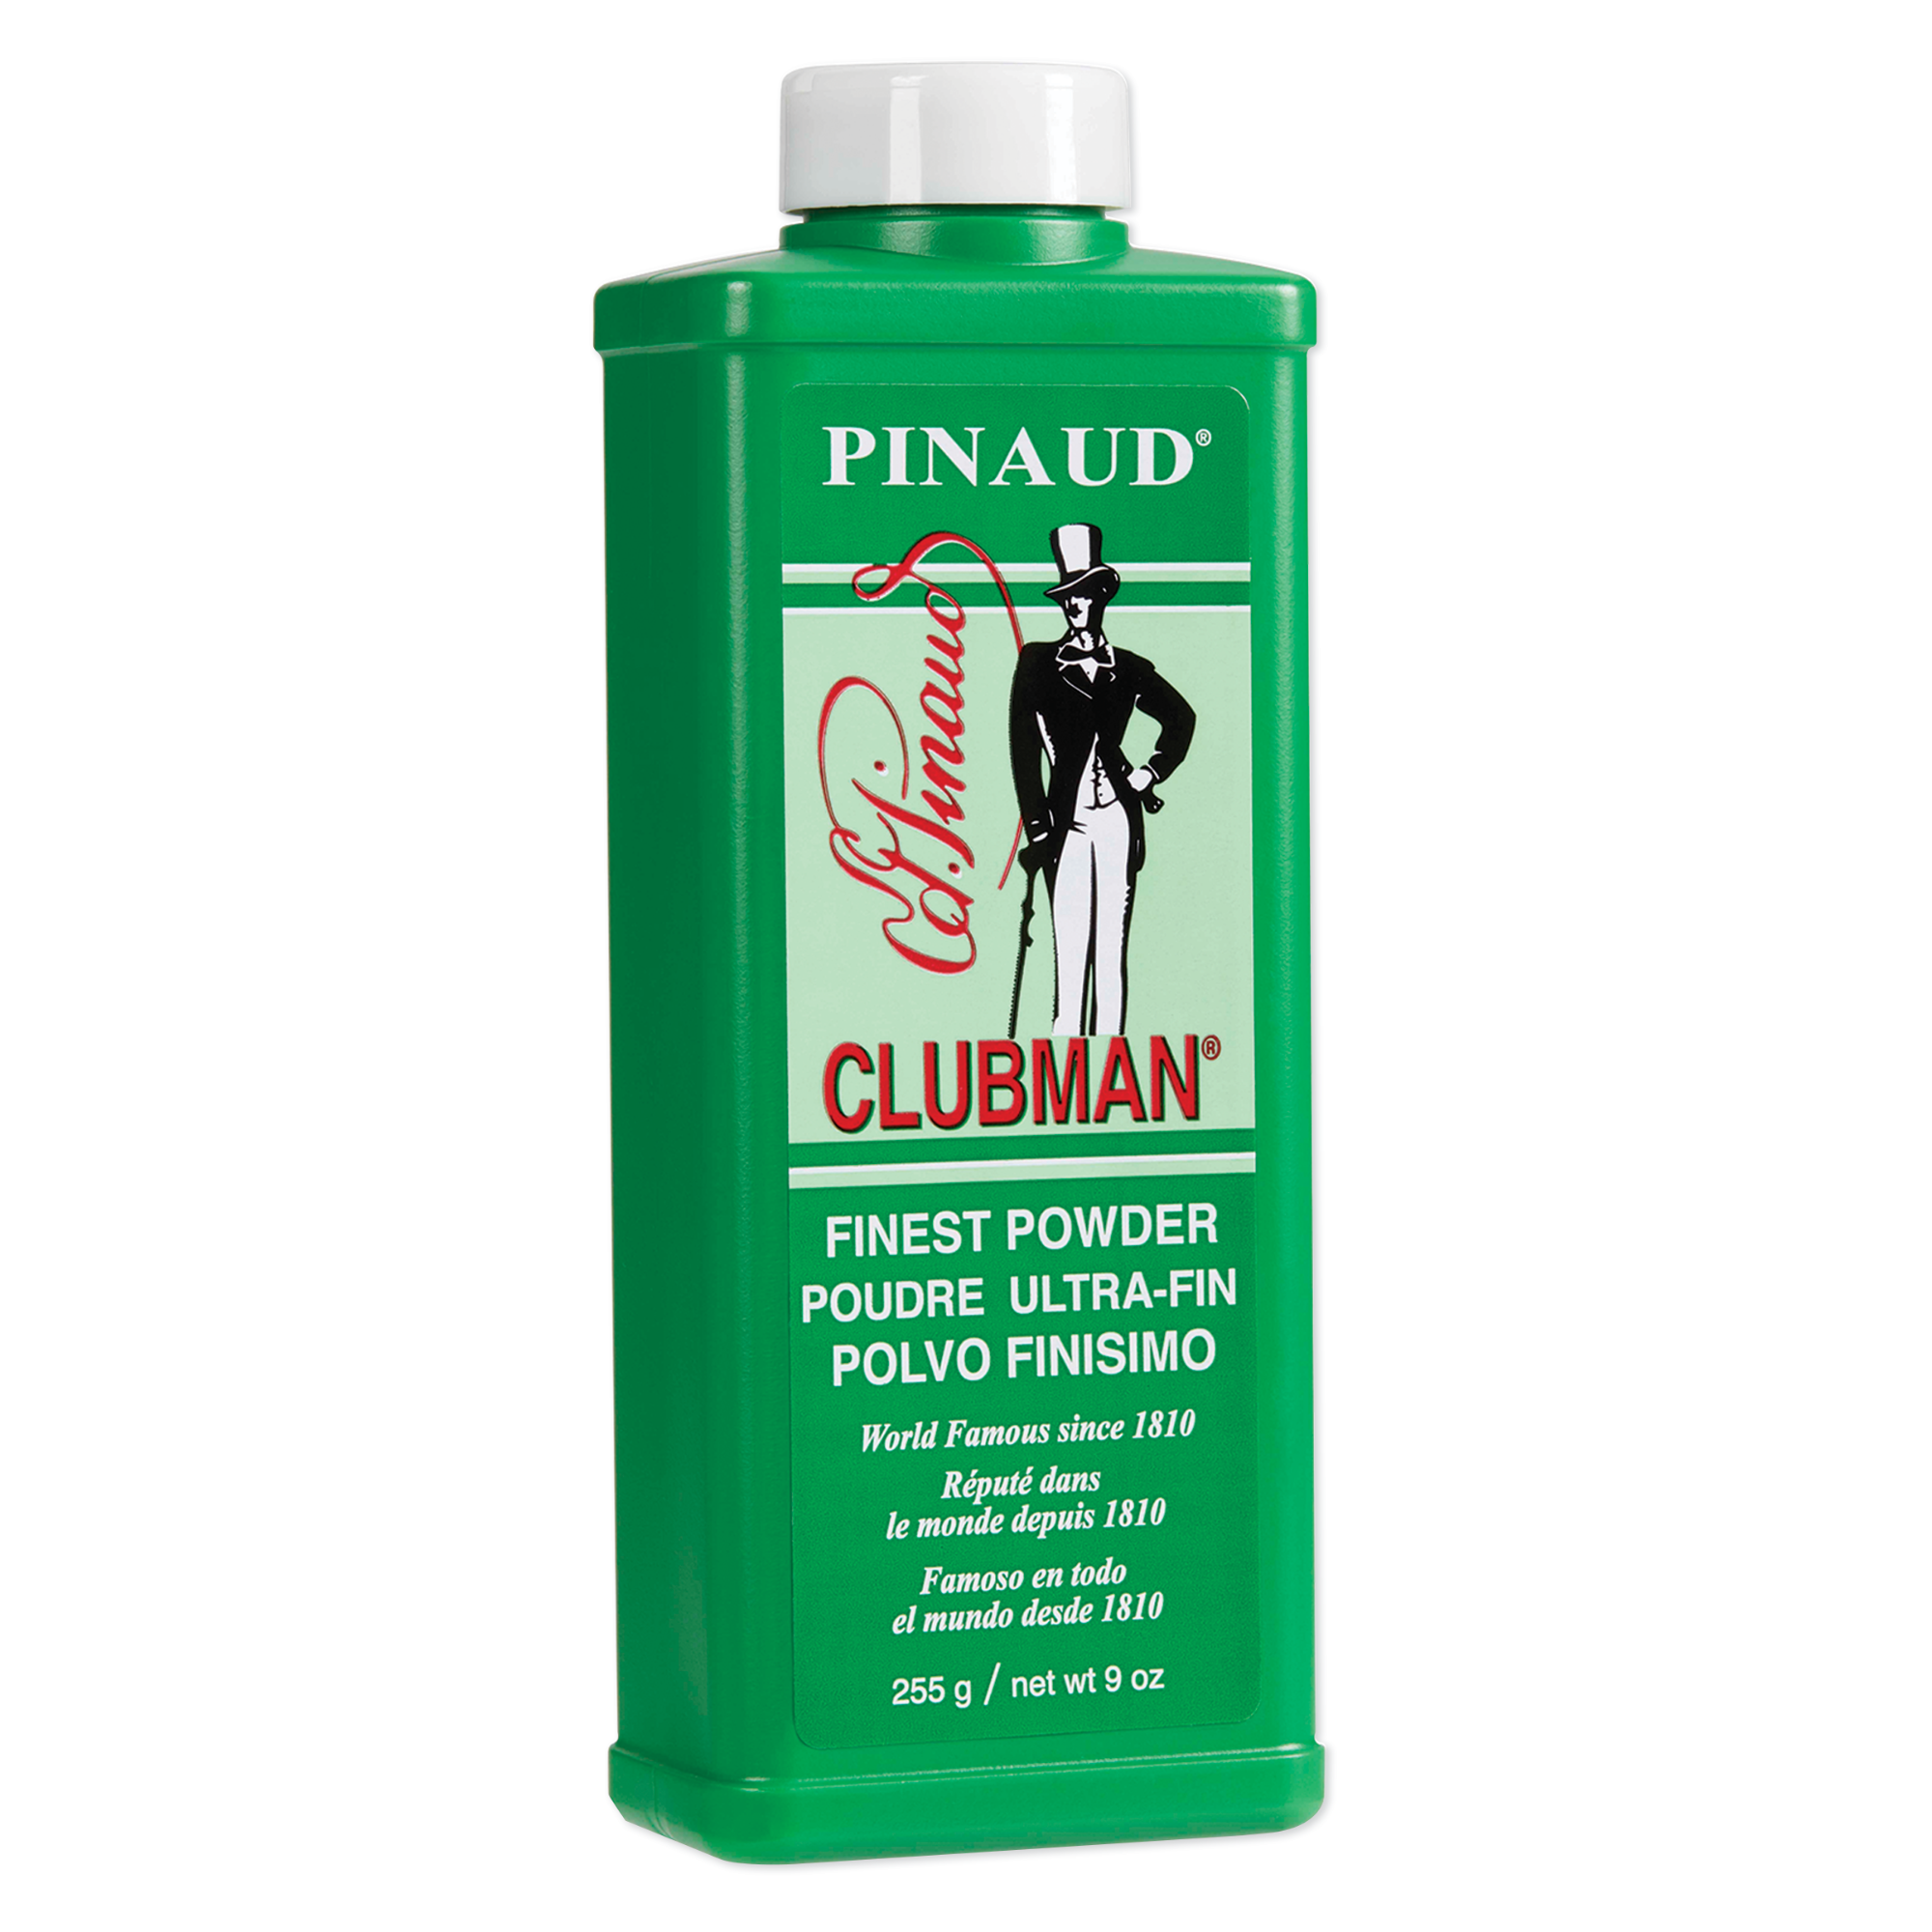 Pinaud Finest Powder